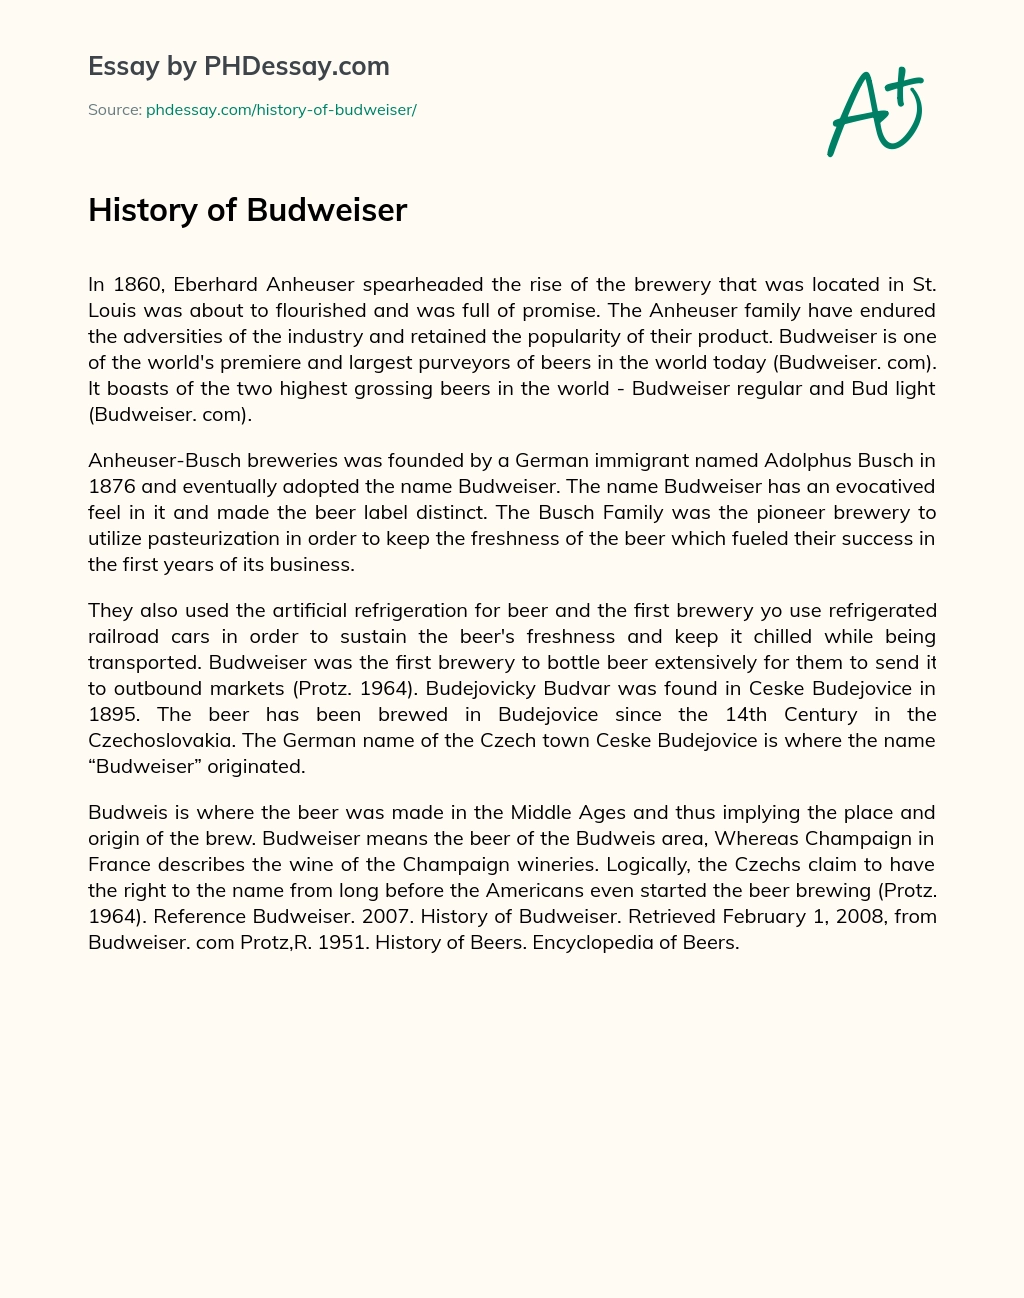 History of Budweiser essay